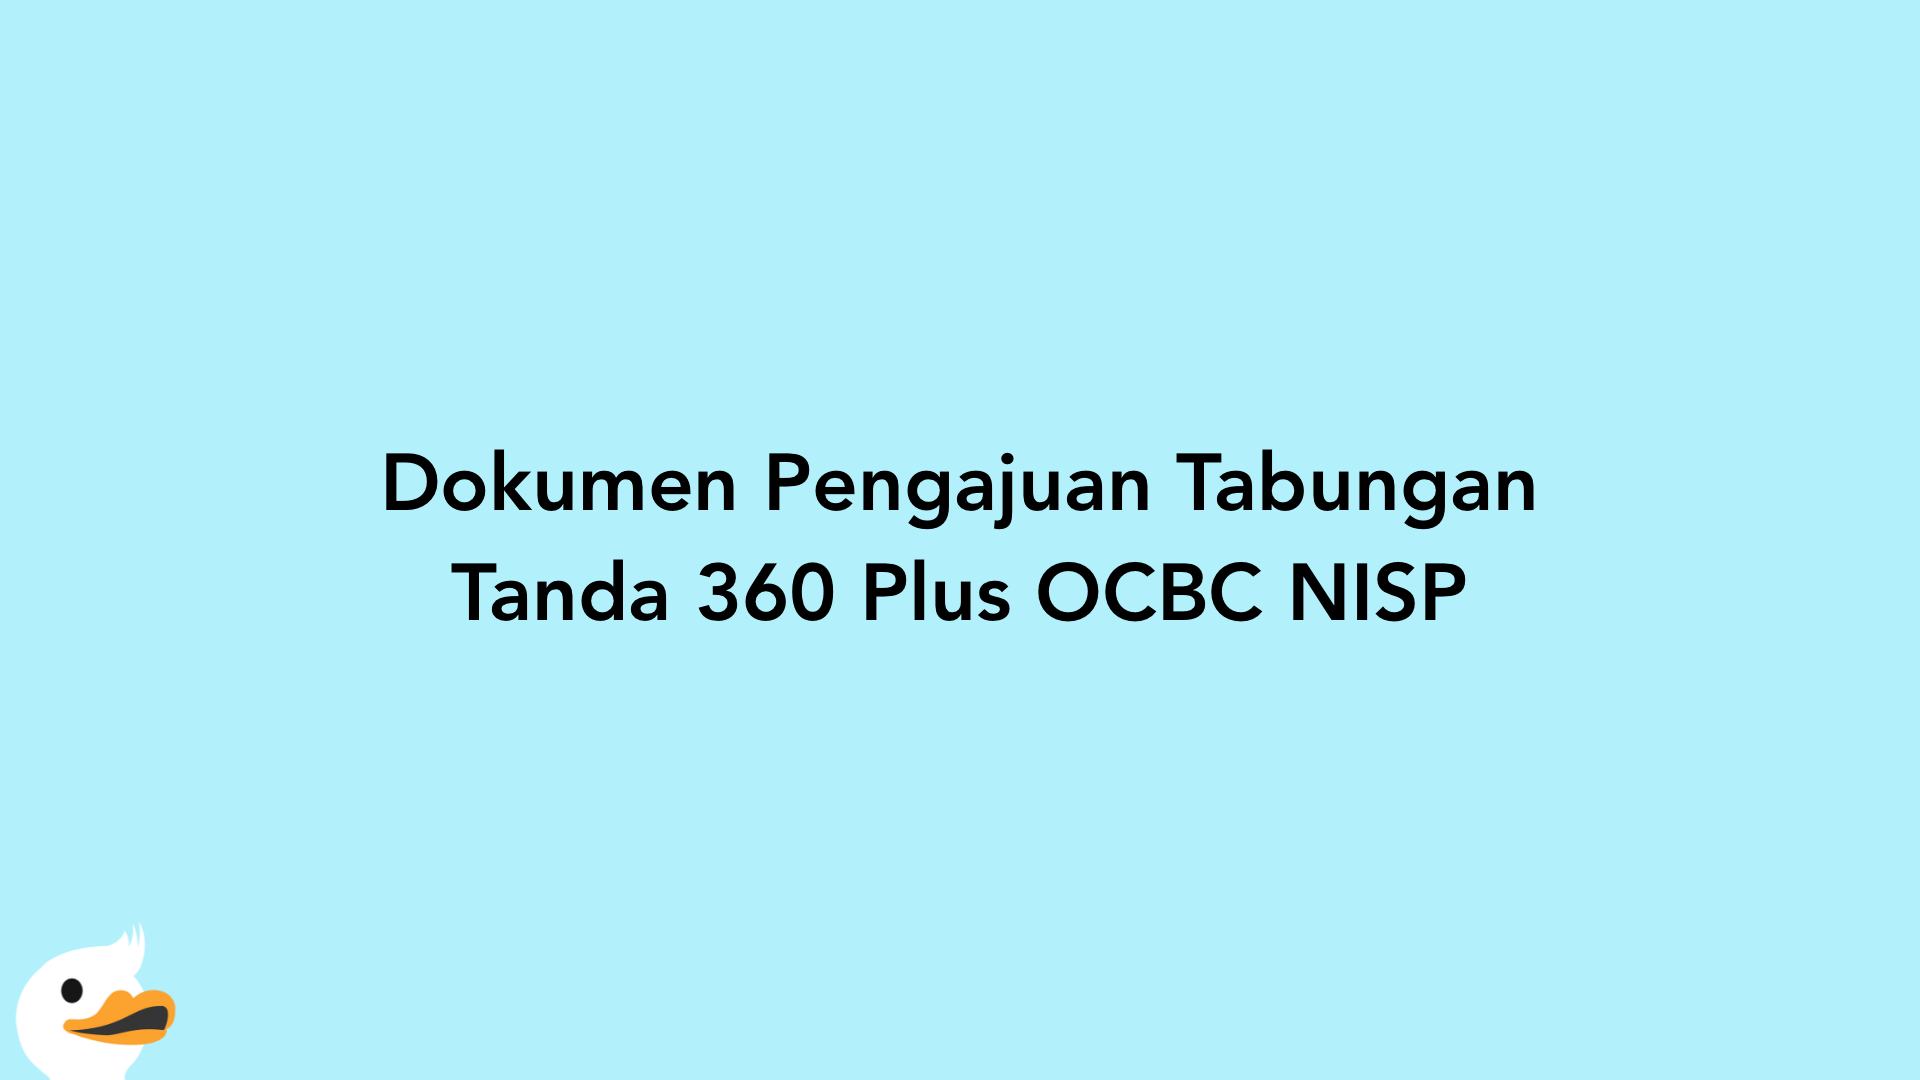 Dokumen Pengajuan Tabungan Tanda 360 Plus OCBC NISP